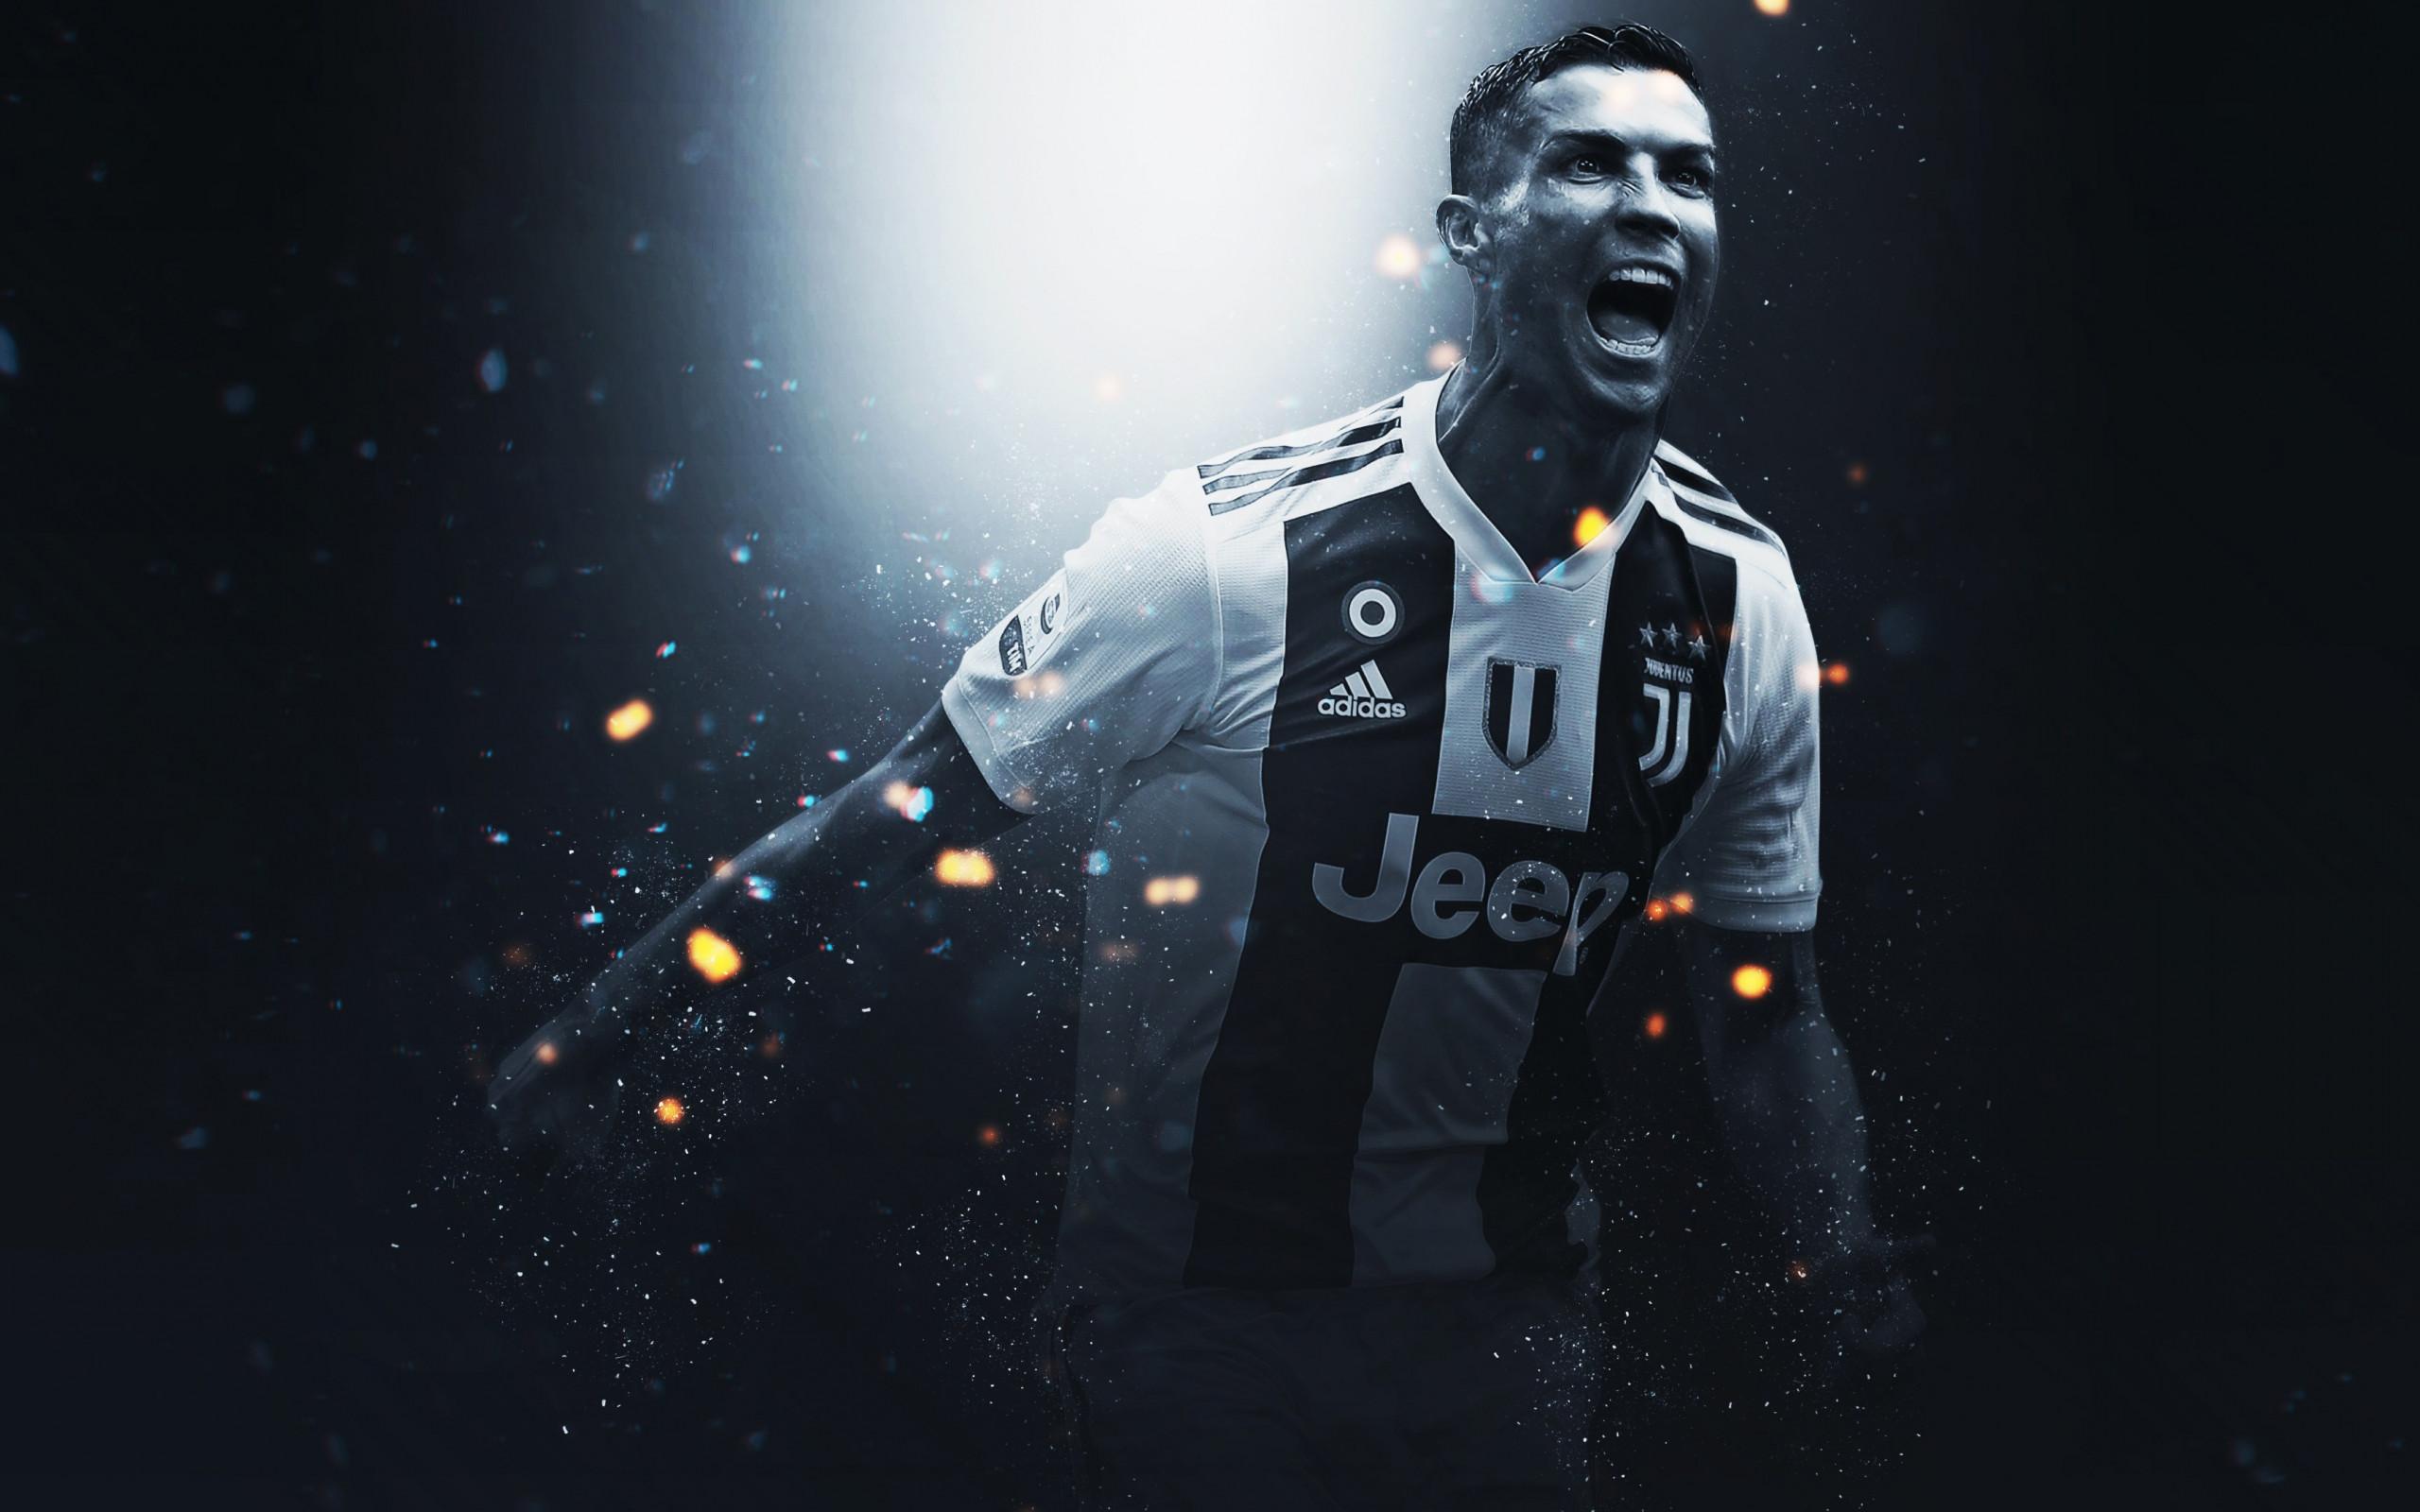 Download wallpaper: Cristiano Ronaldo at Juventus 2560x1600